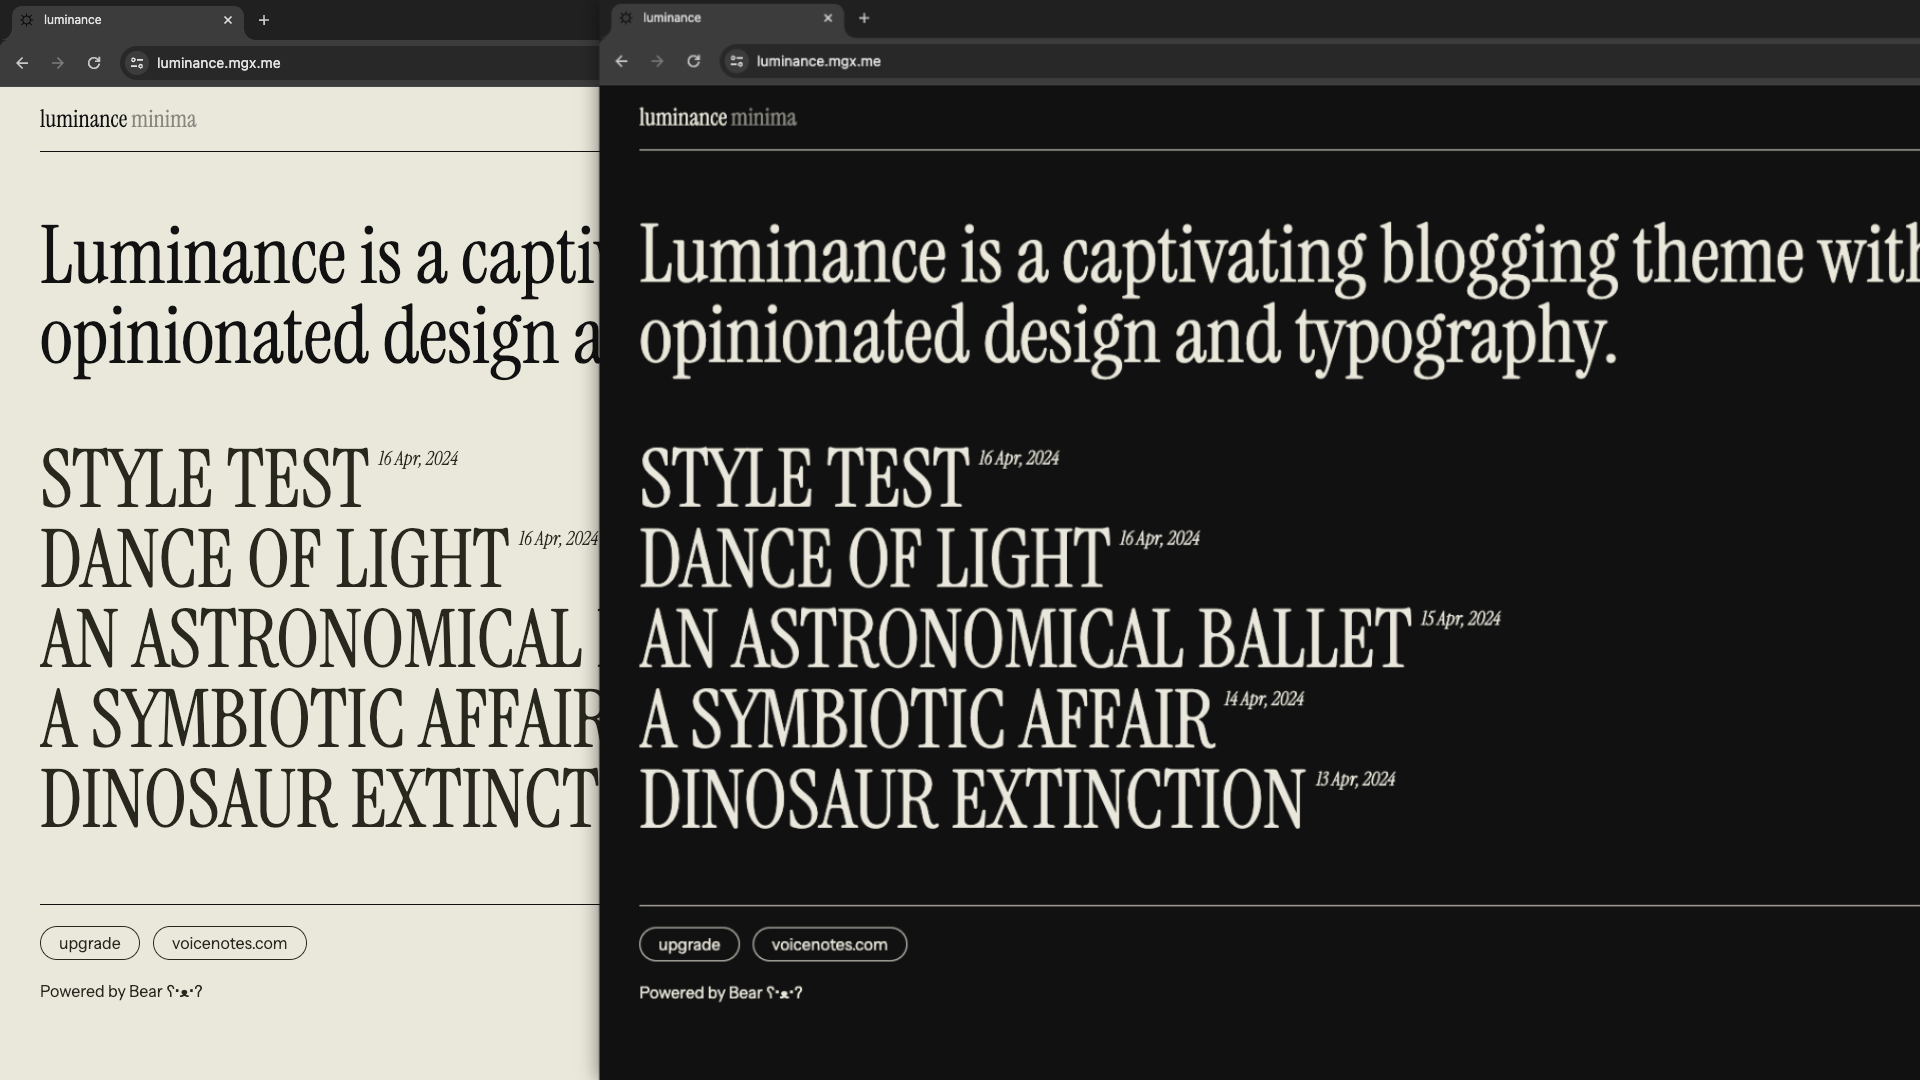 luminance minima theme for bearblog